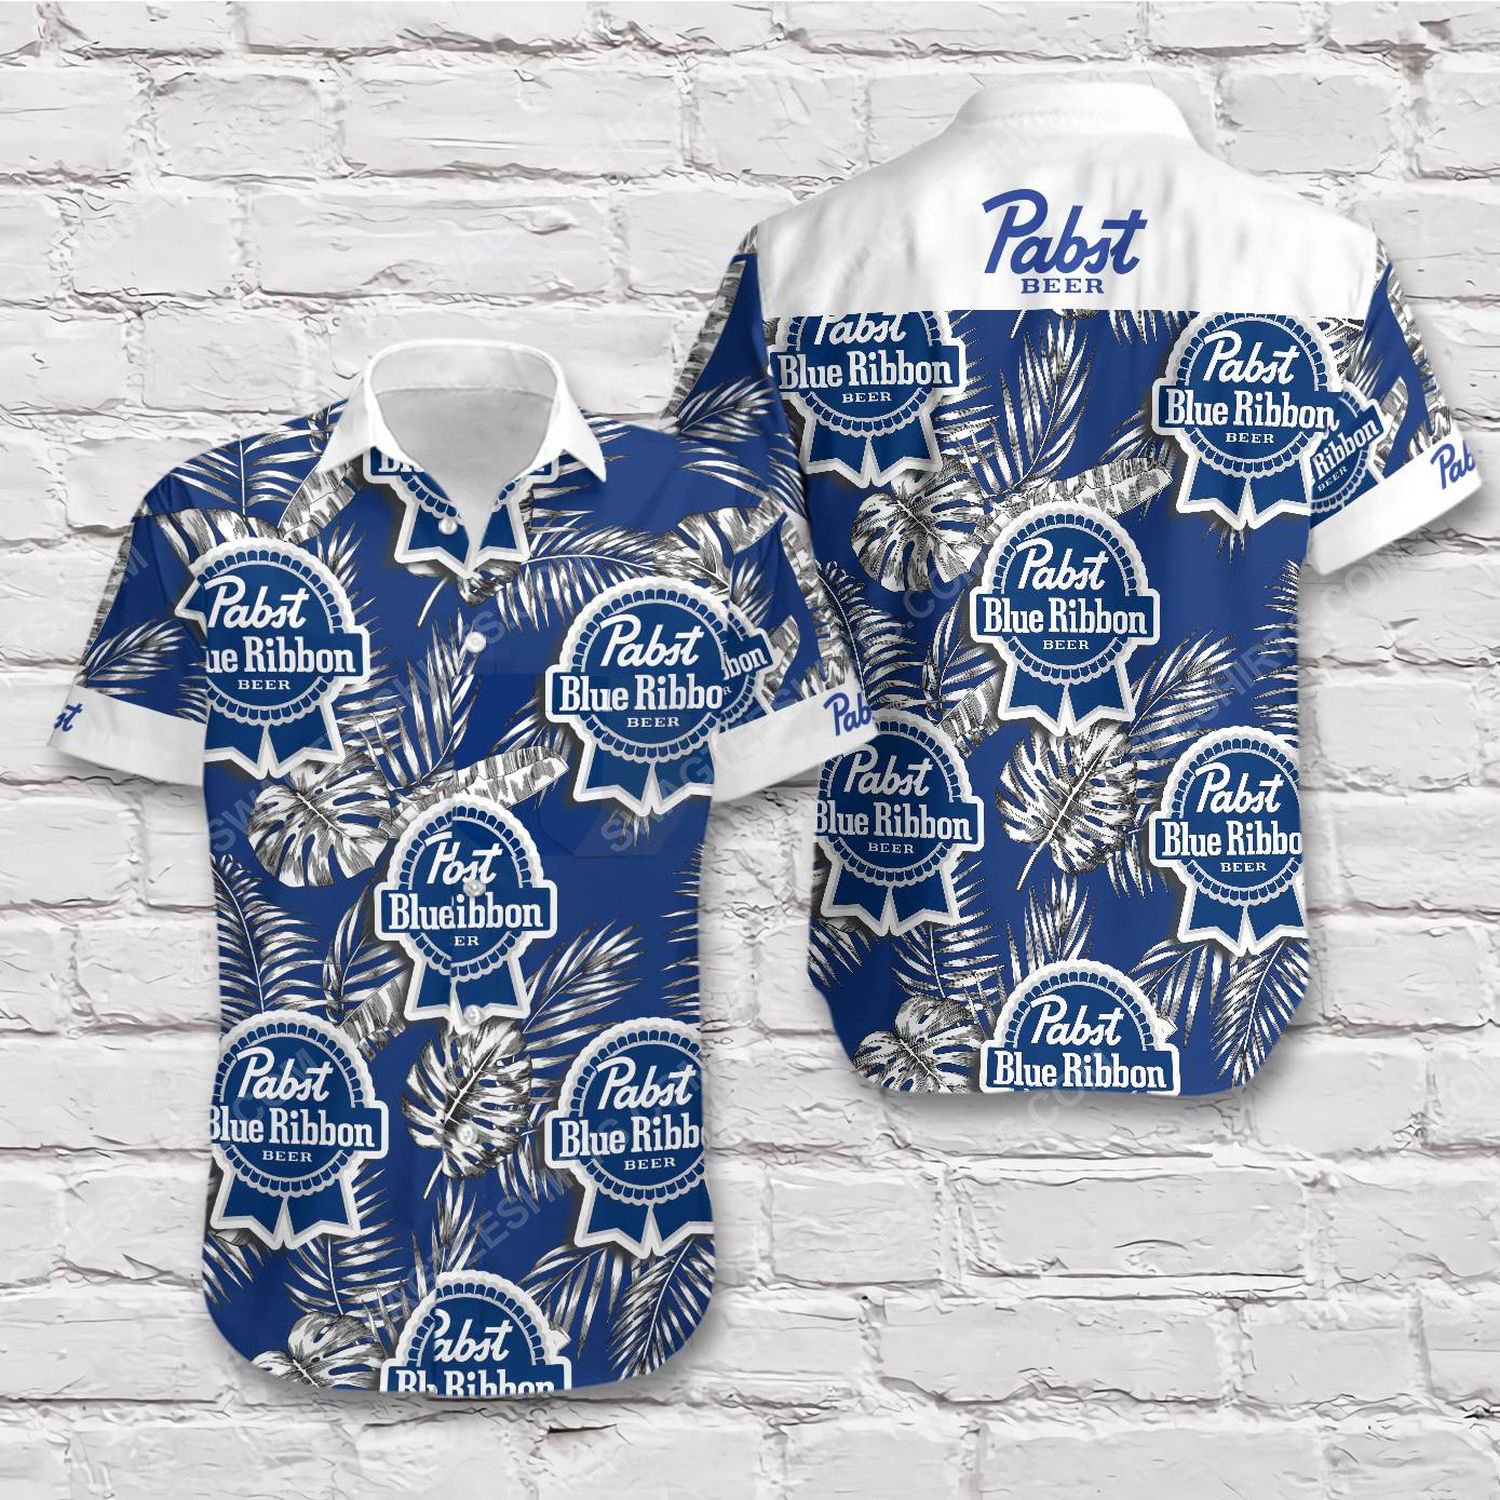 Tropical pabst blue ribbon beer short sleeve hawaiian shirt 1